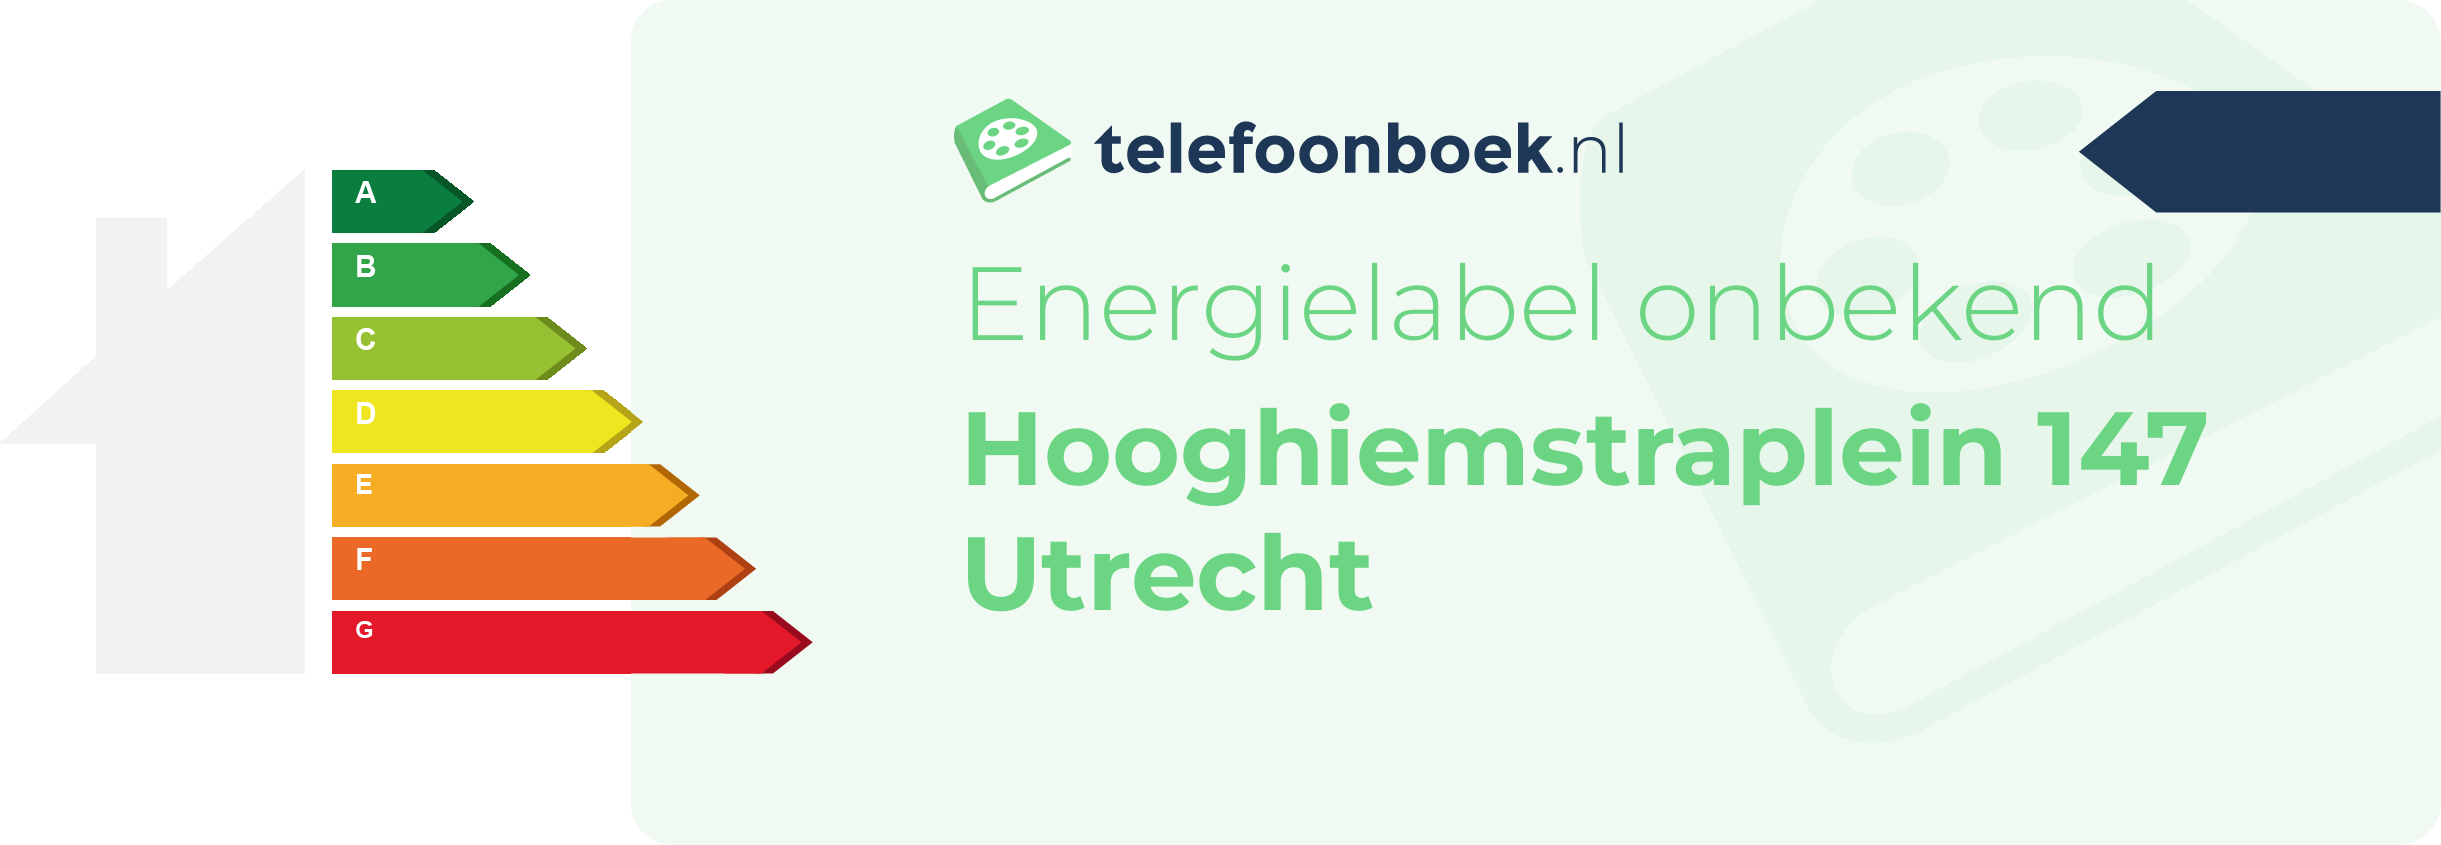 Energielabel Hooghiemstraplein 147 Utrecht